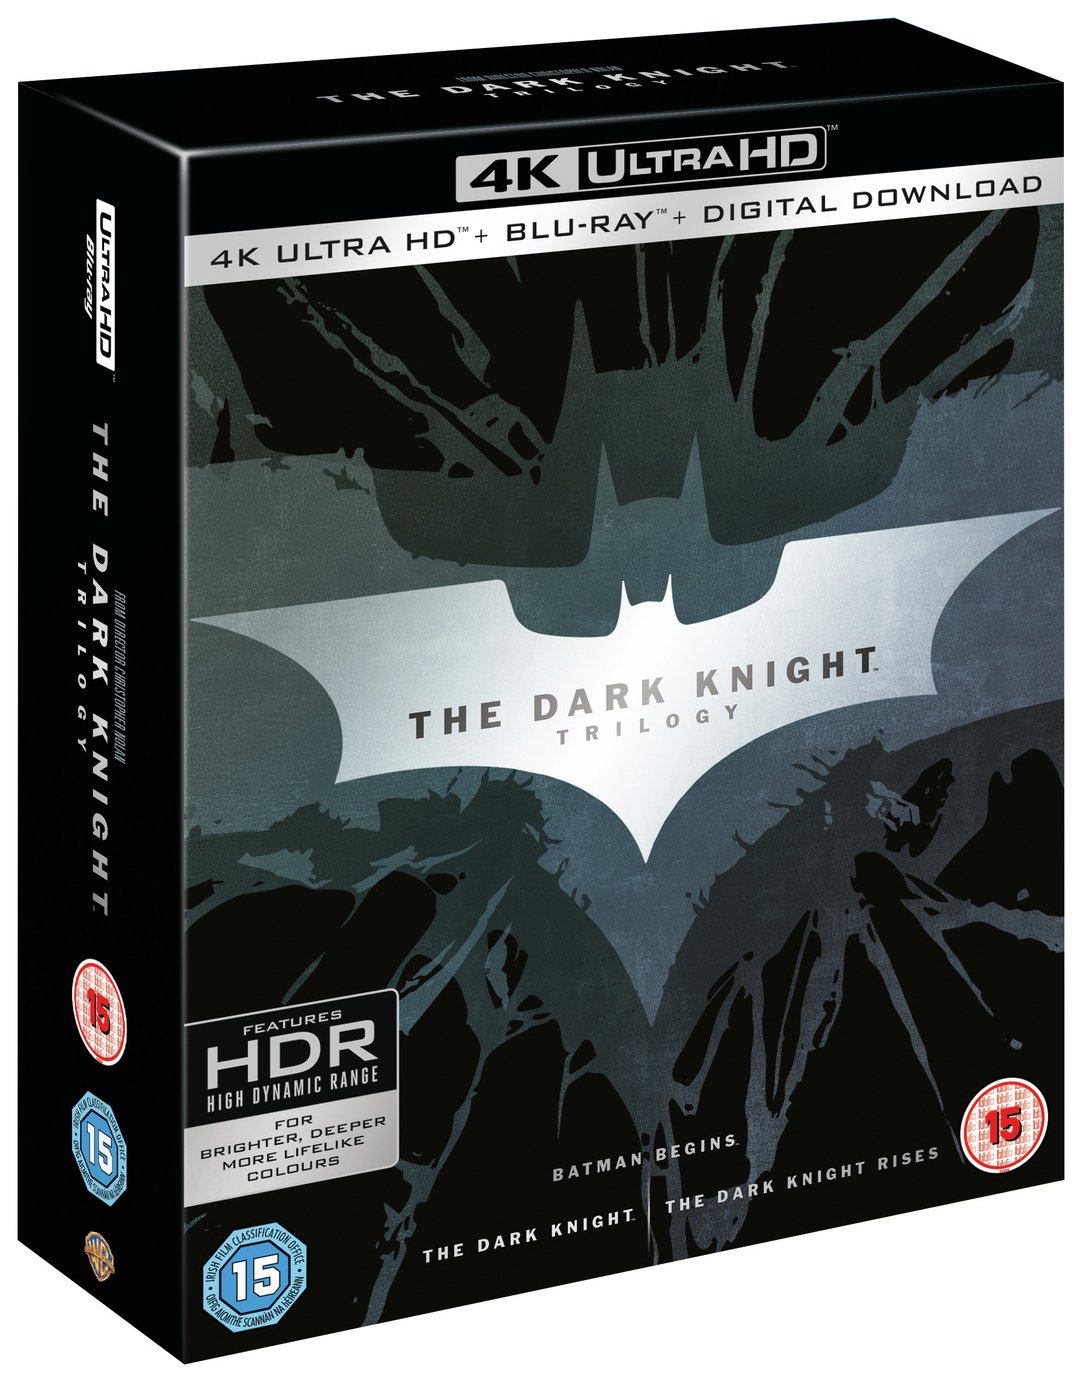 The Dark Knight Trilogy 4K UHD Blu-Ray Box Set Review